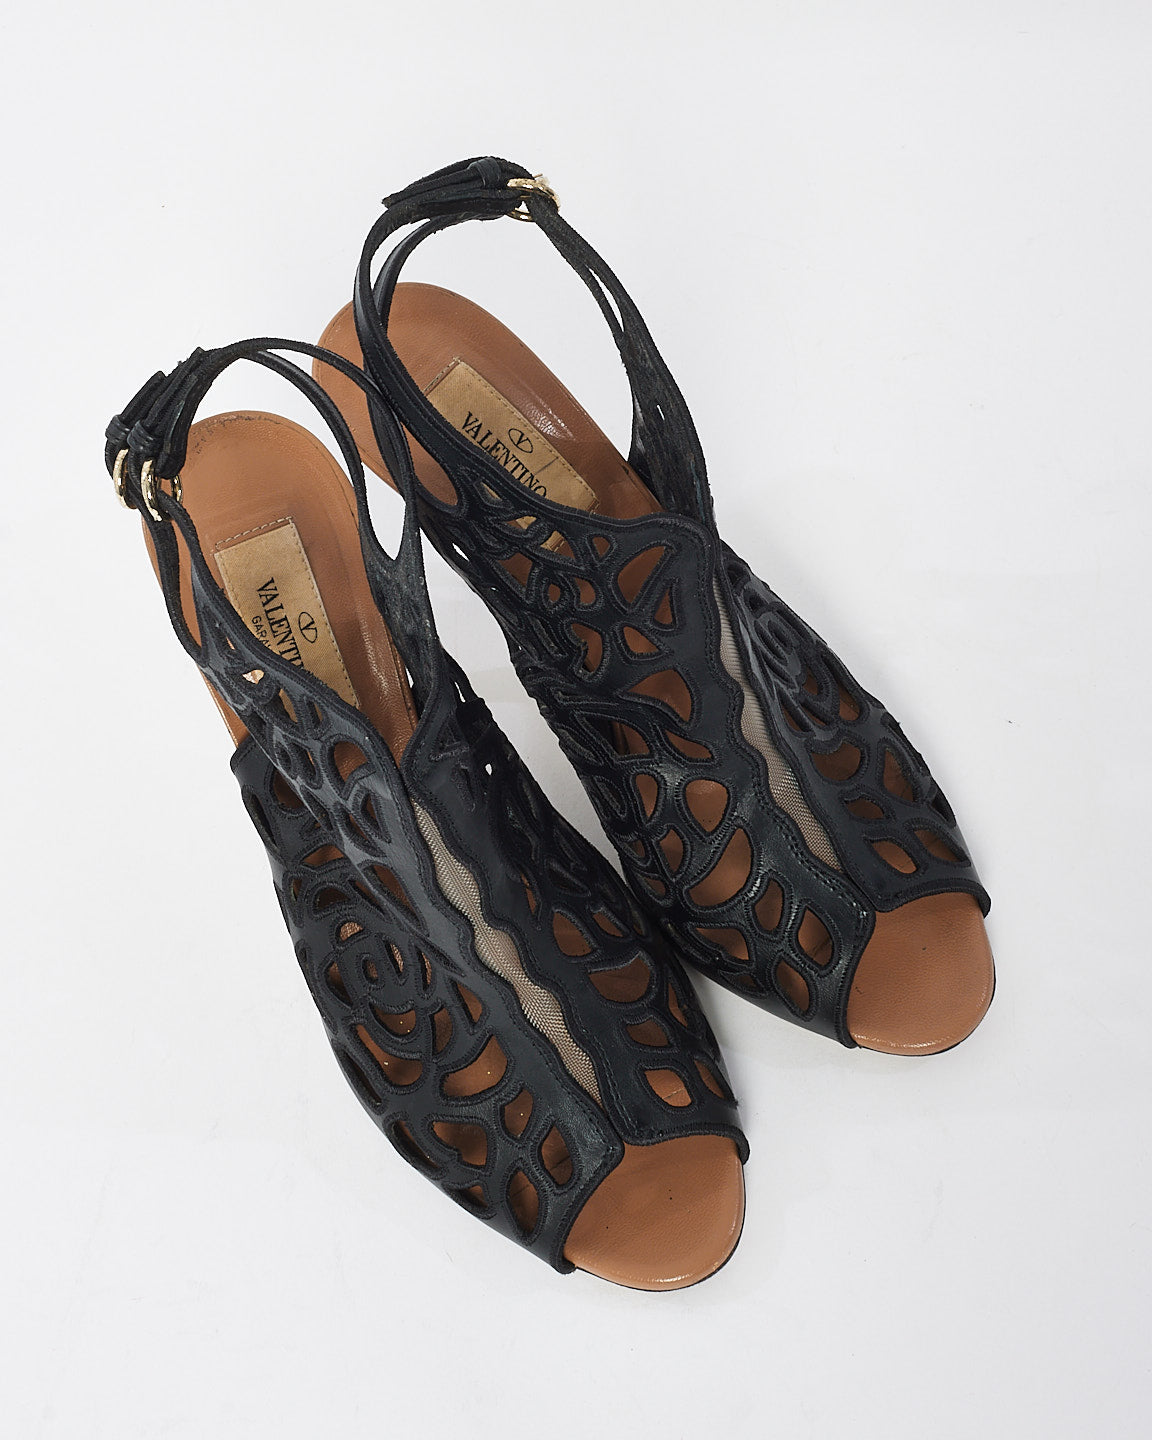 Valentino Black Leather Casadei Peep Toe Sandals - 38.5